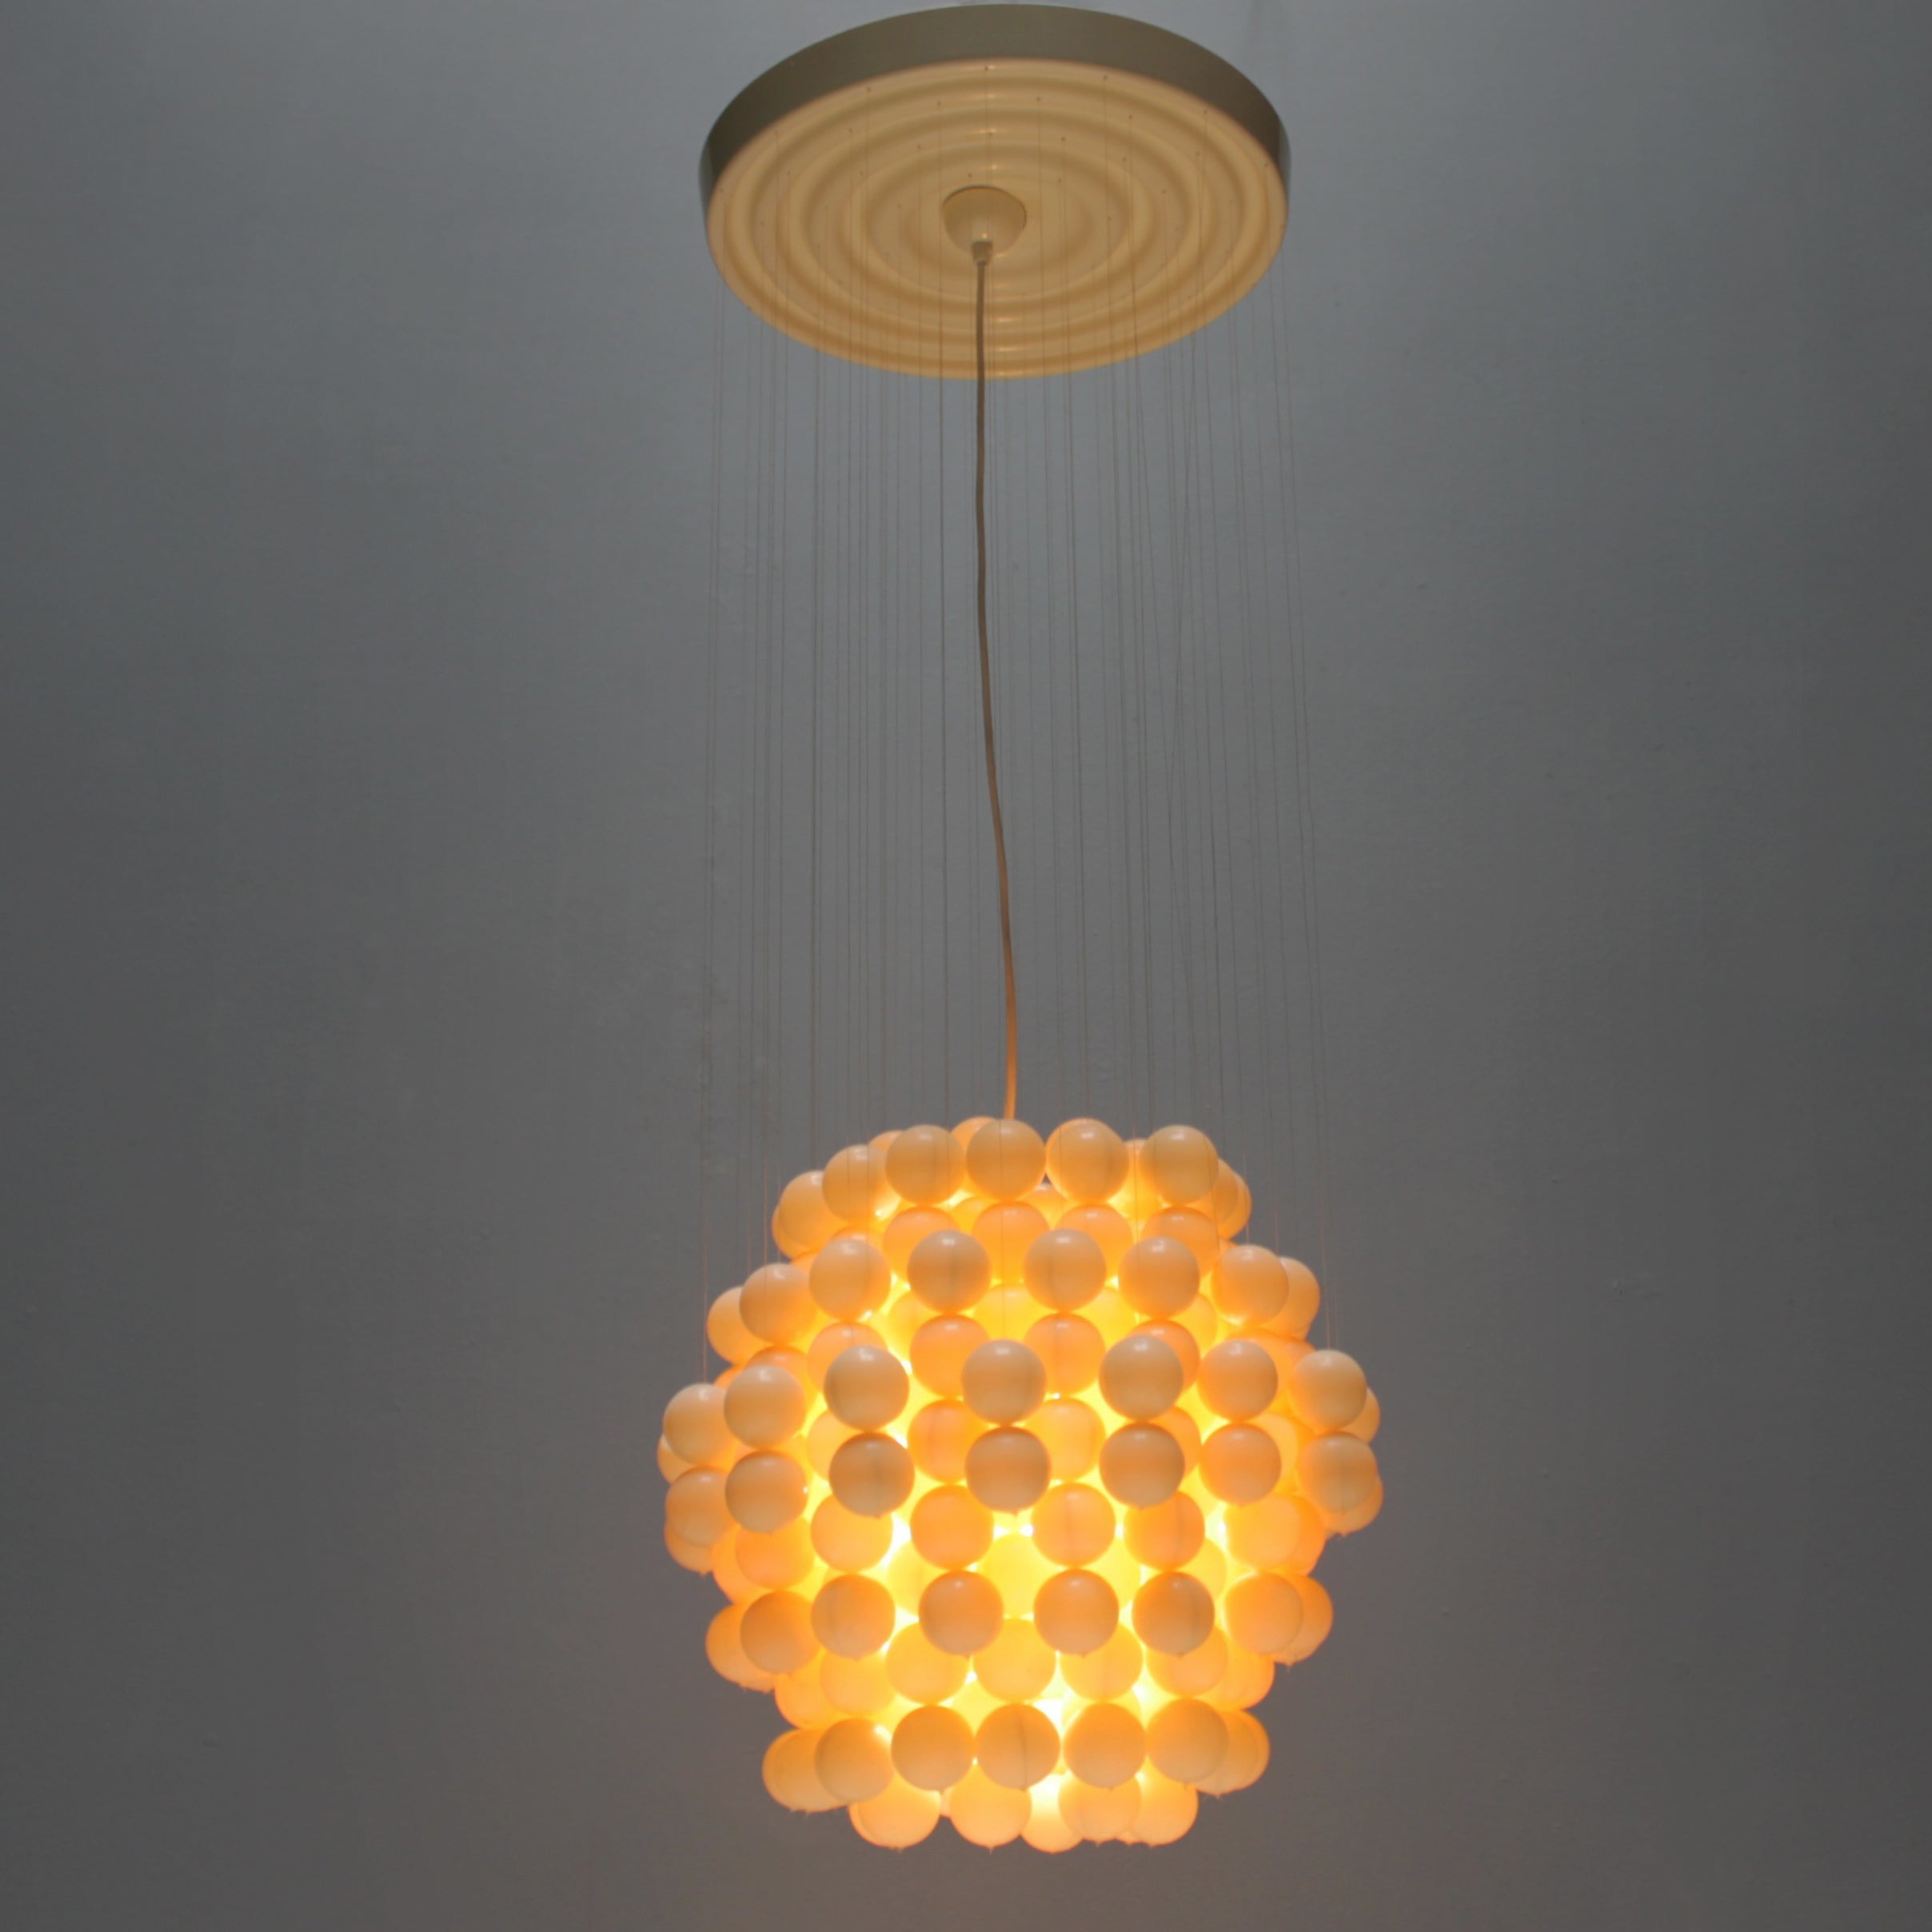 Original 'Ball Lamp' by Verner Panton for LüBer, Switzerland at ...